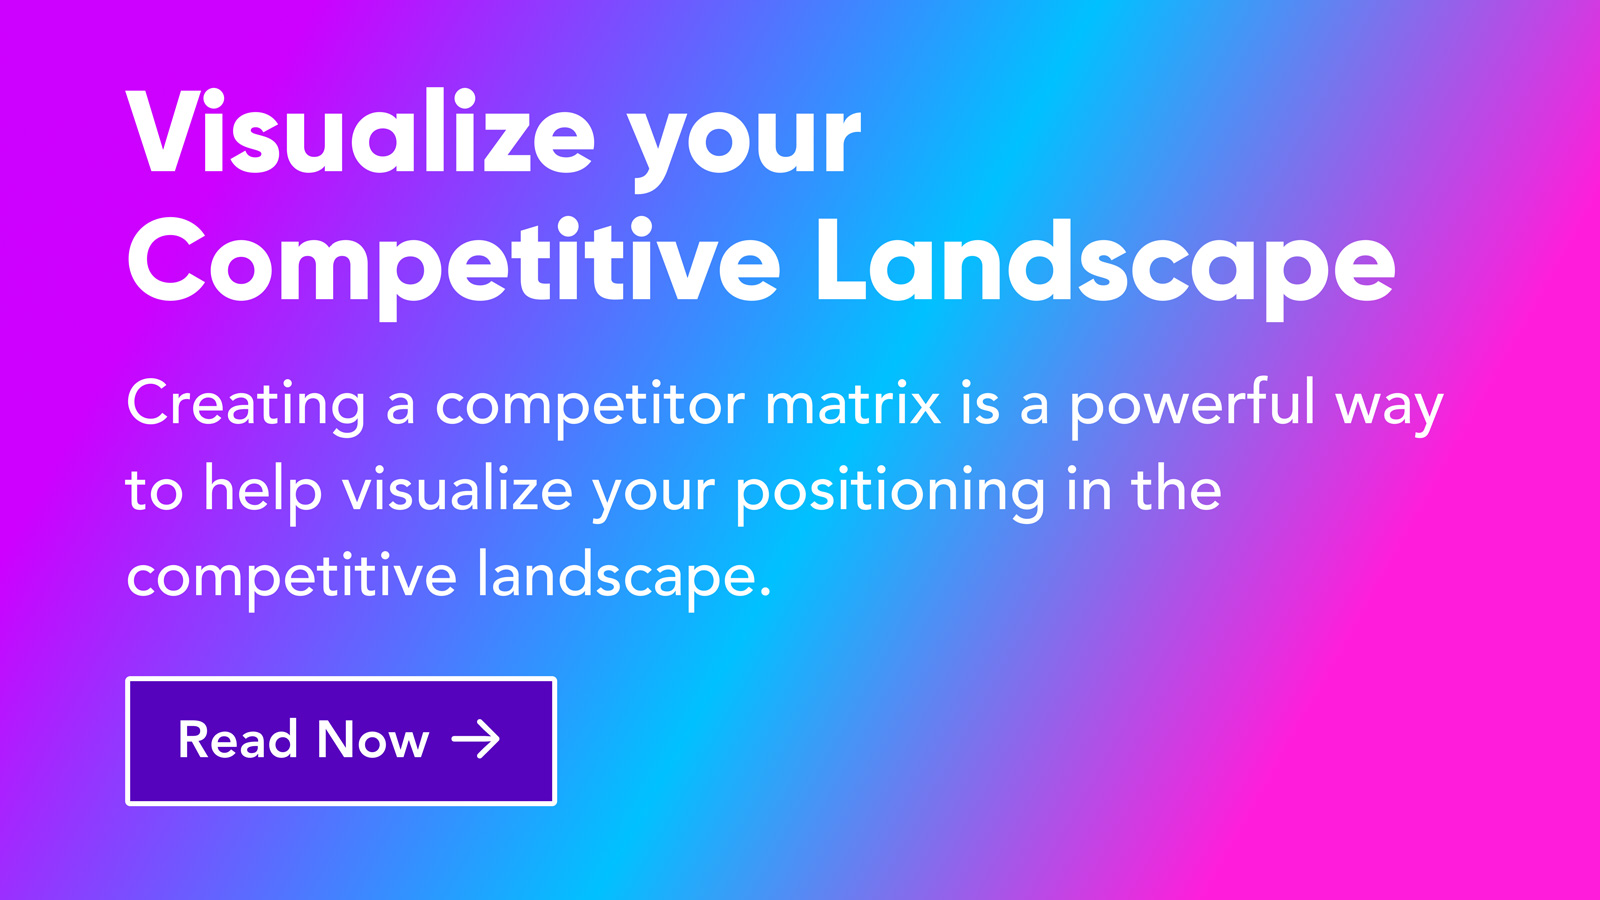 Visualize your Competitive Landscape